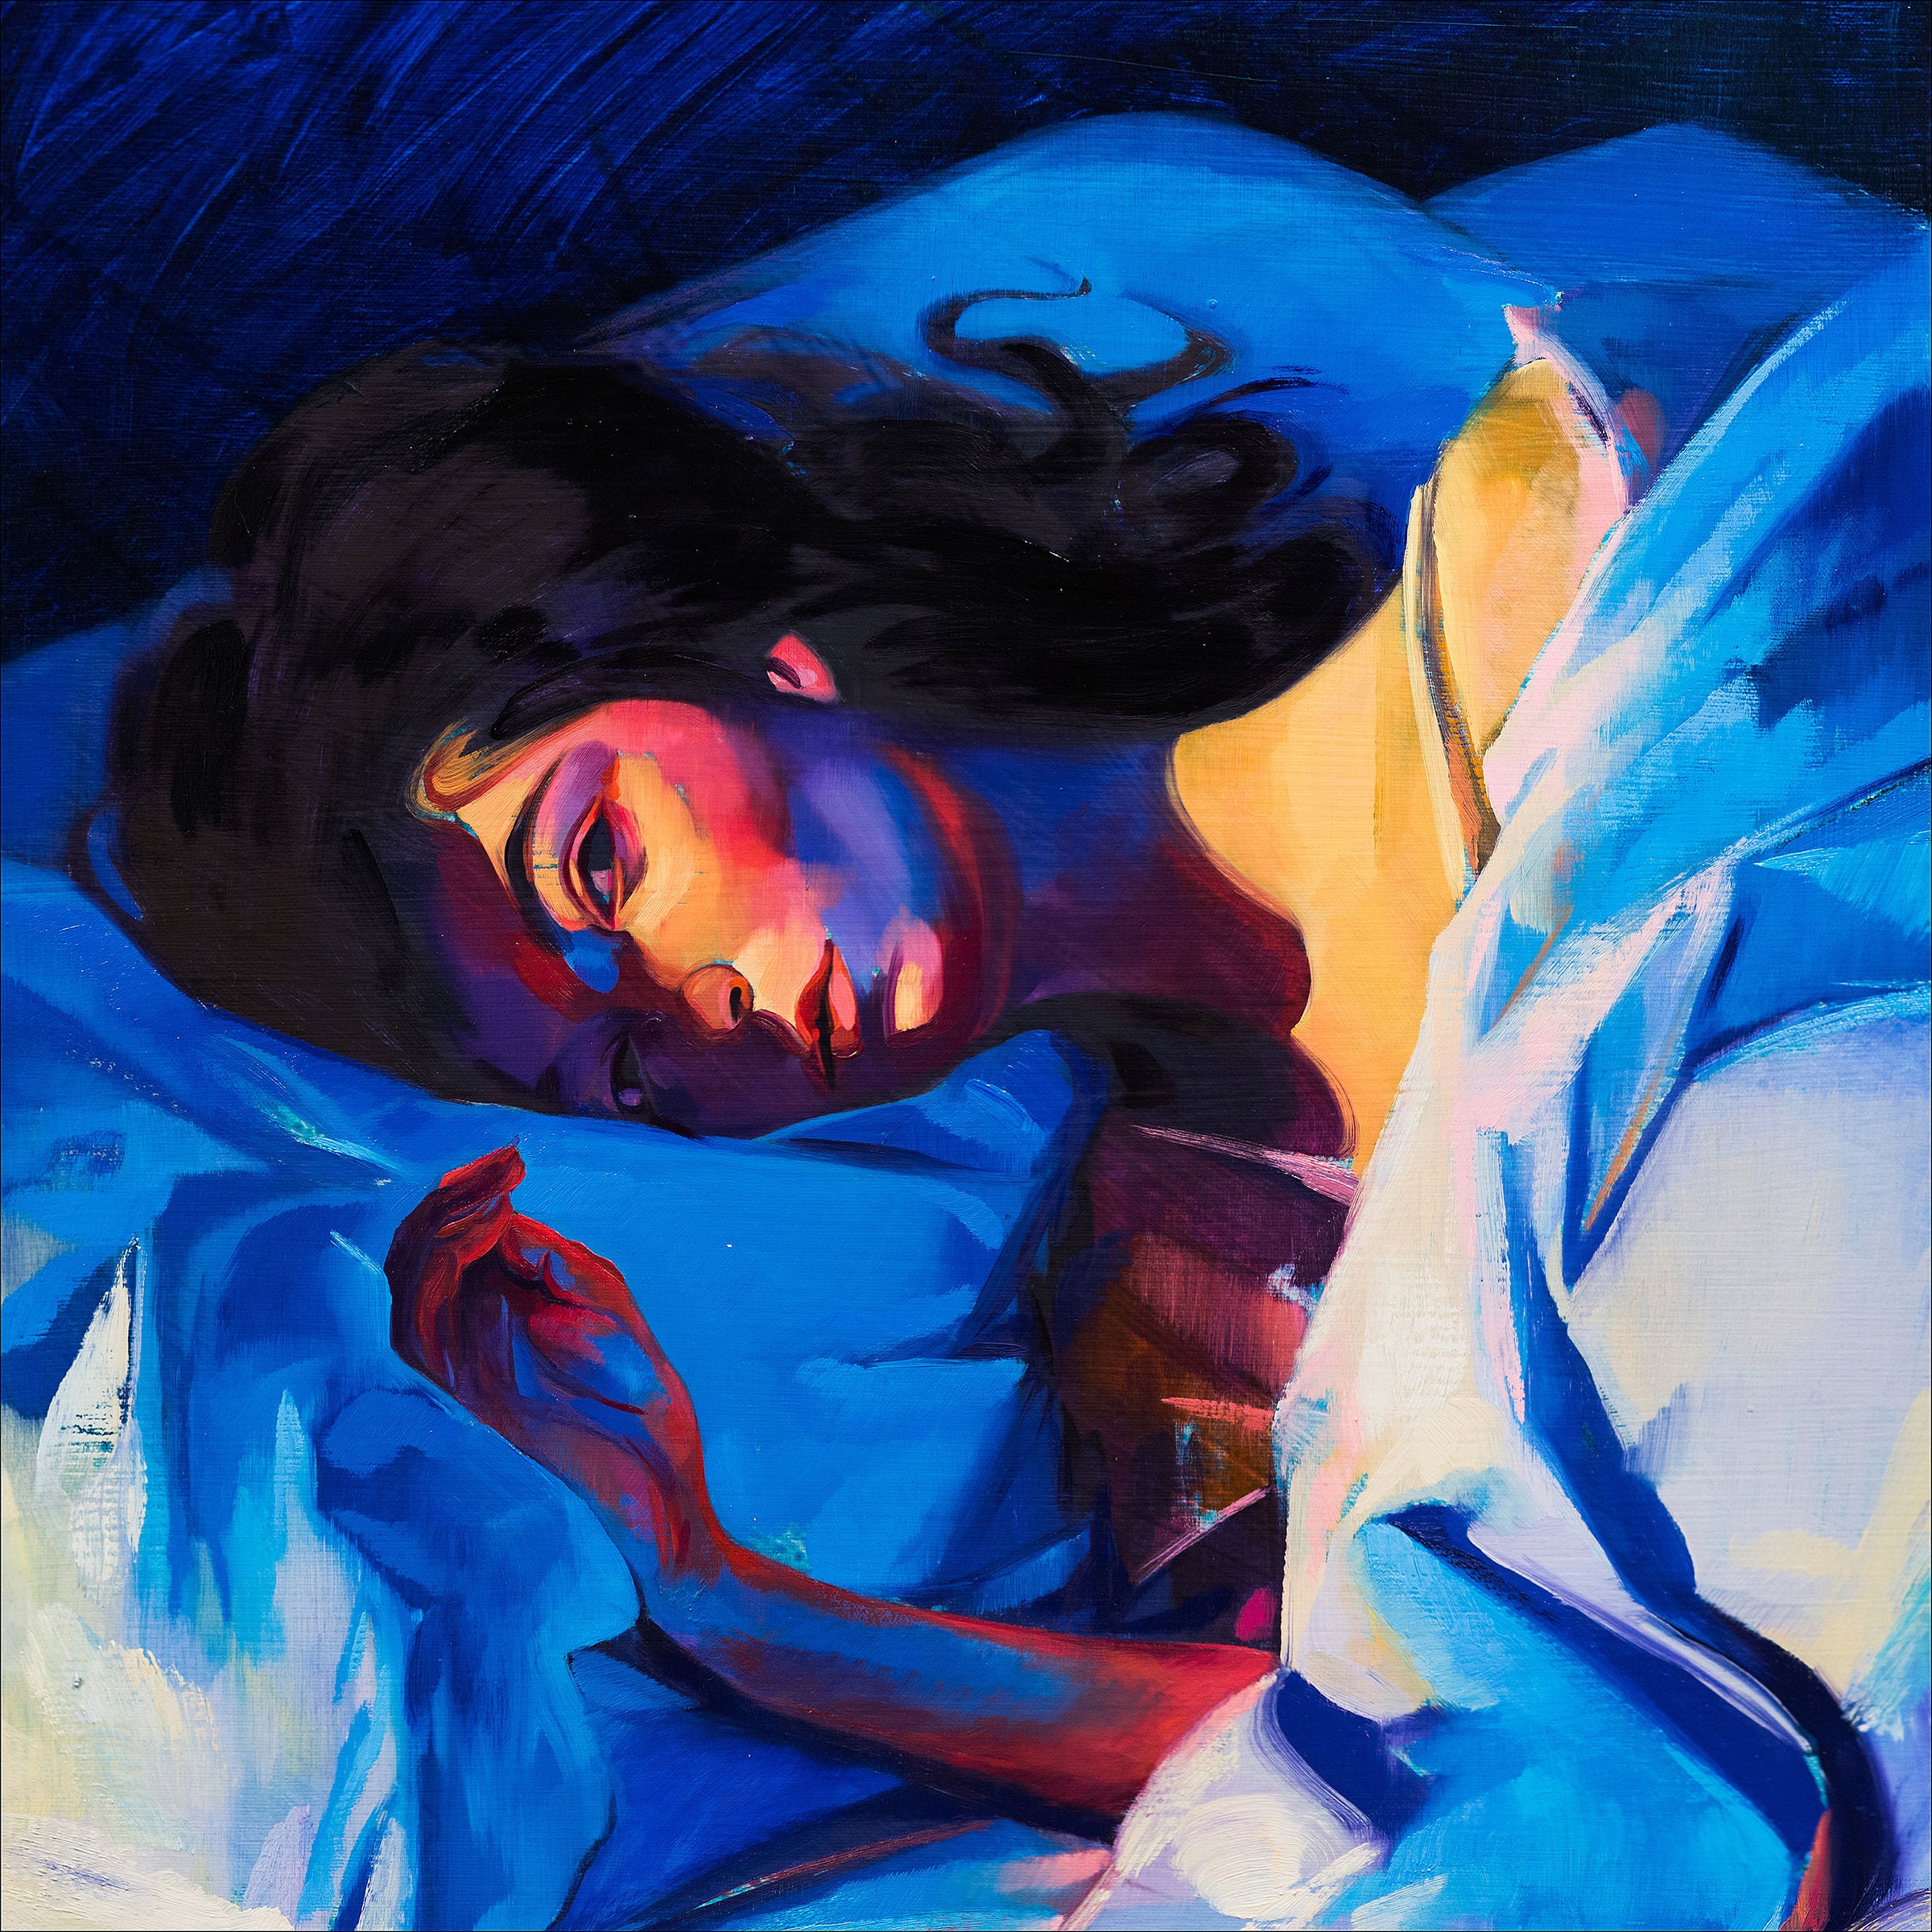 Lorde - Melodrama Vinyl LP